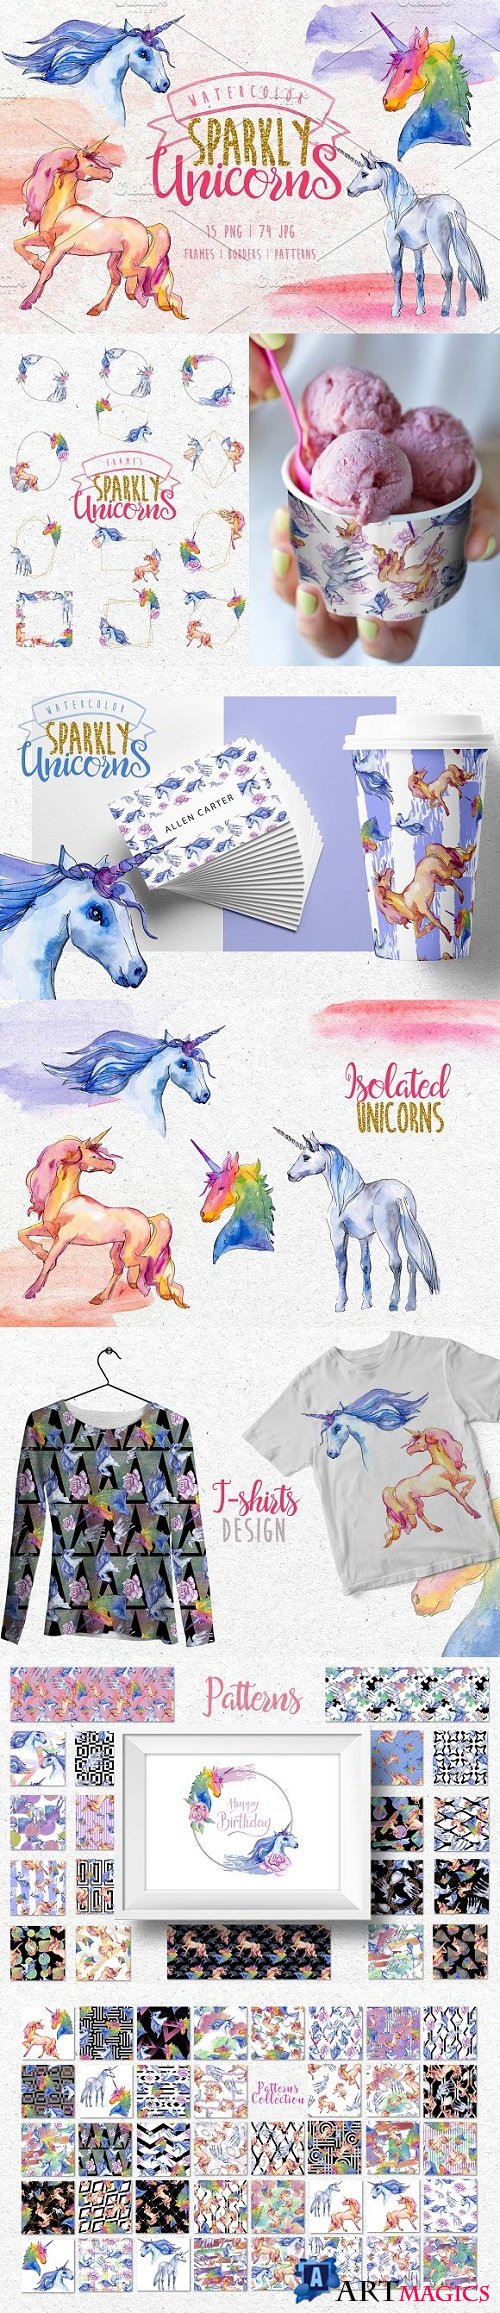 Watercolor Sparkly unicorns PNG set - 3063188